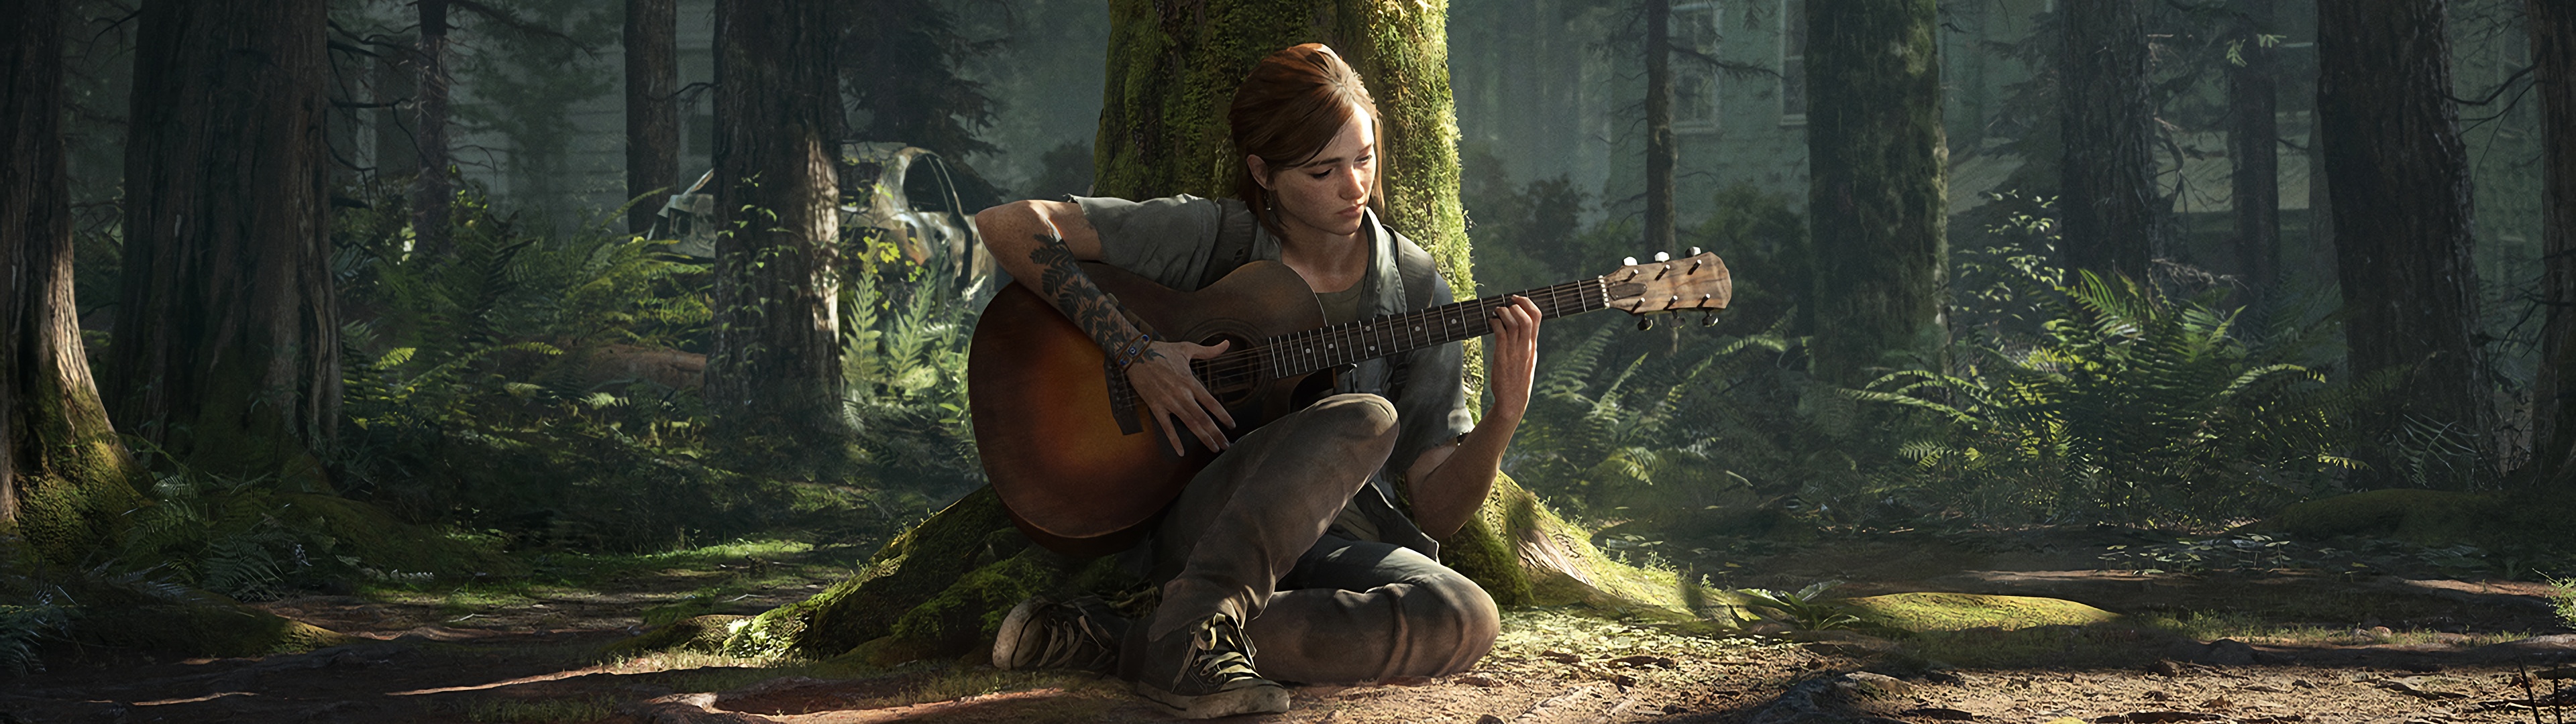 Wallpaper : Ellie, PlayStation 4, The Last of Us 2 1920x1080 - yusufepik -  1900477 - HD Wallpapers - WallHere